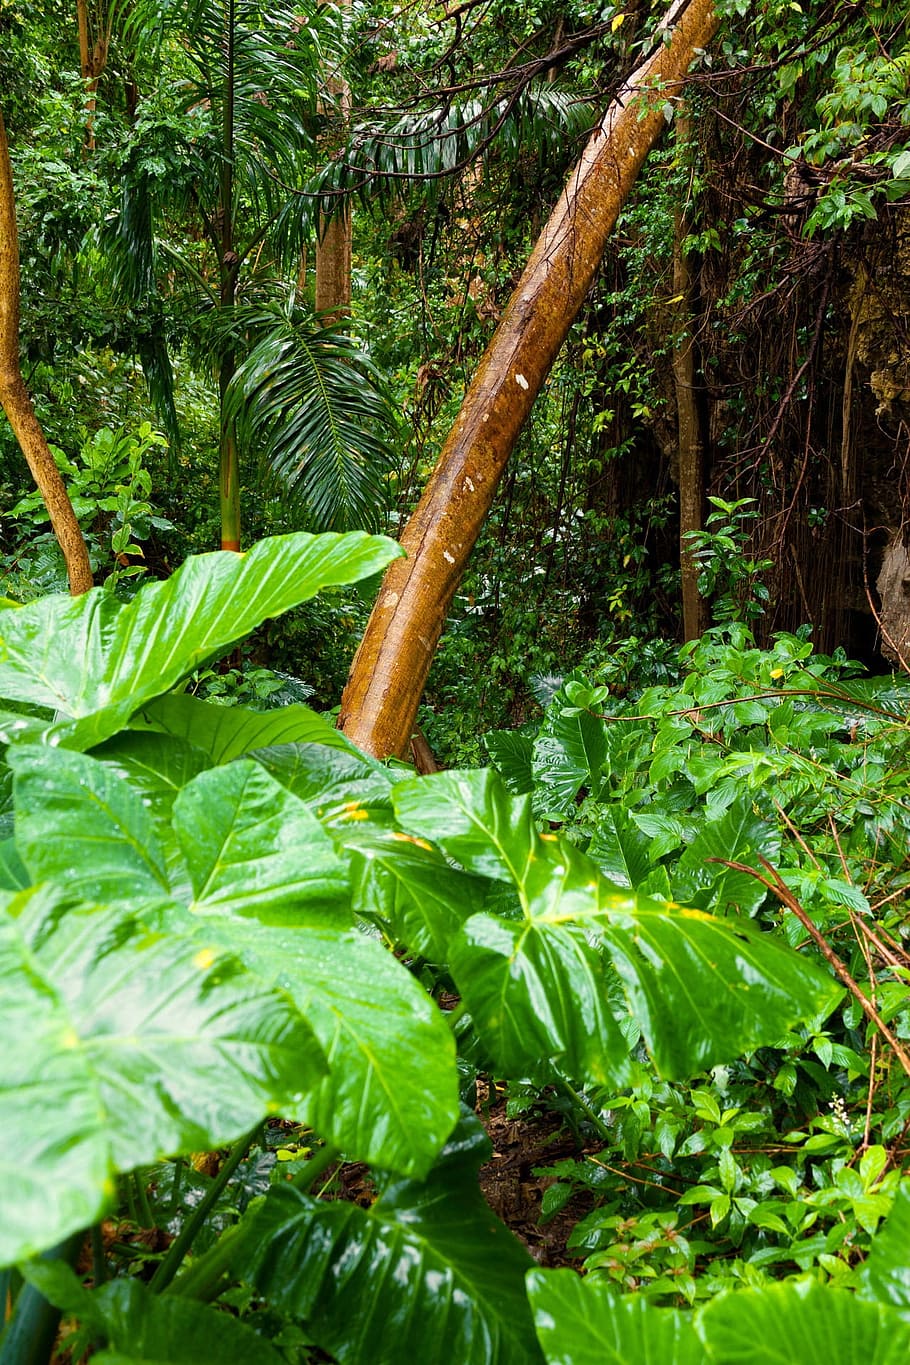 taro plant, palm tree, background, dense, environment, flora, foliage, forest, green, greenery